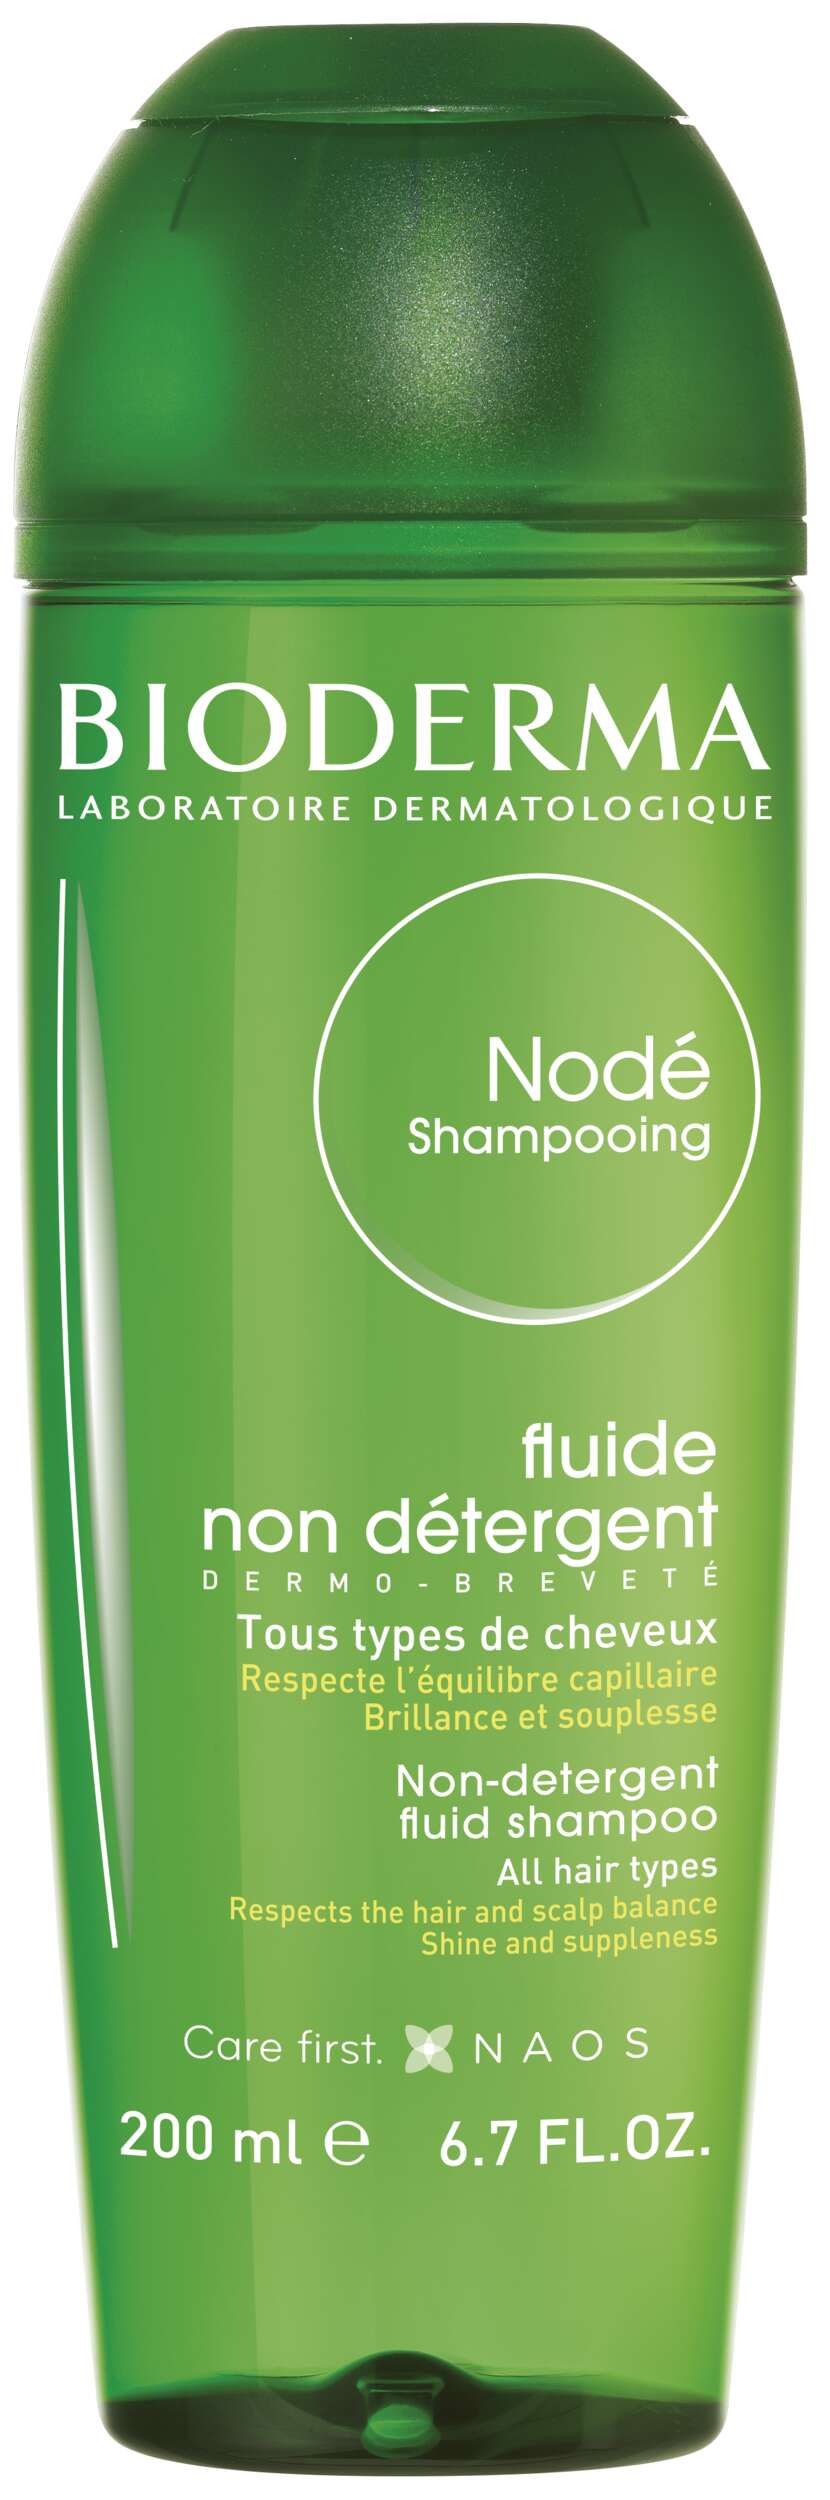 Bioderma Nodè Shampooing Fluid